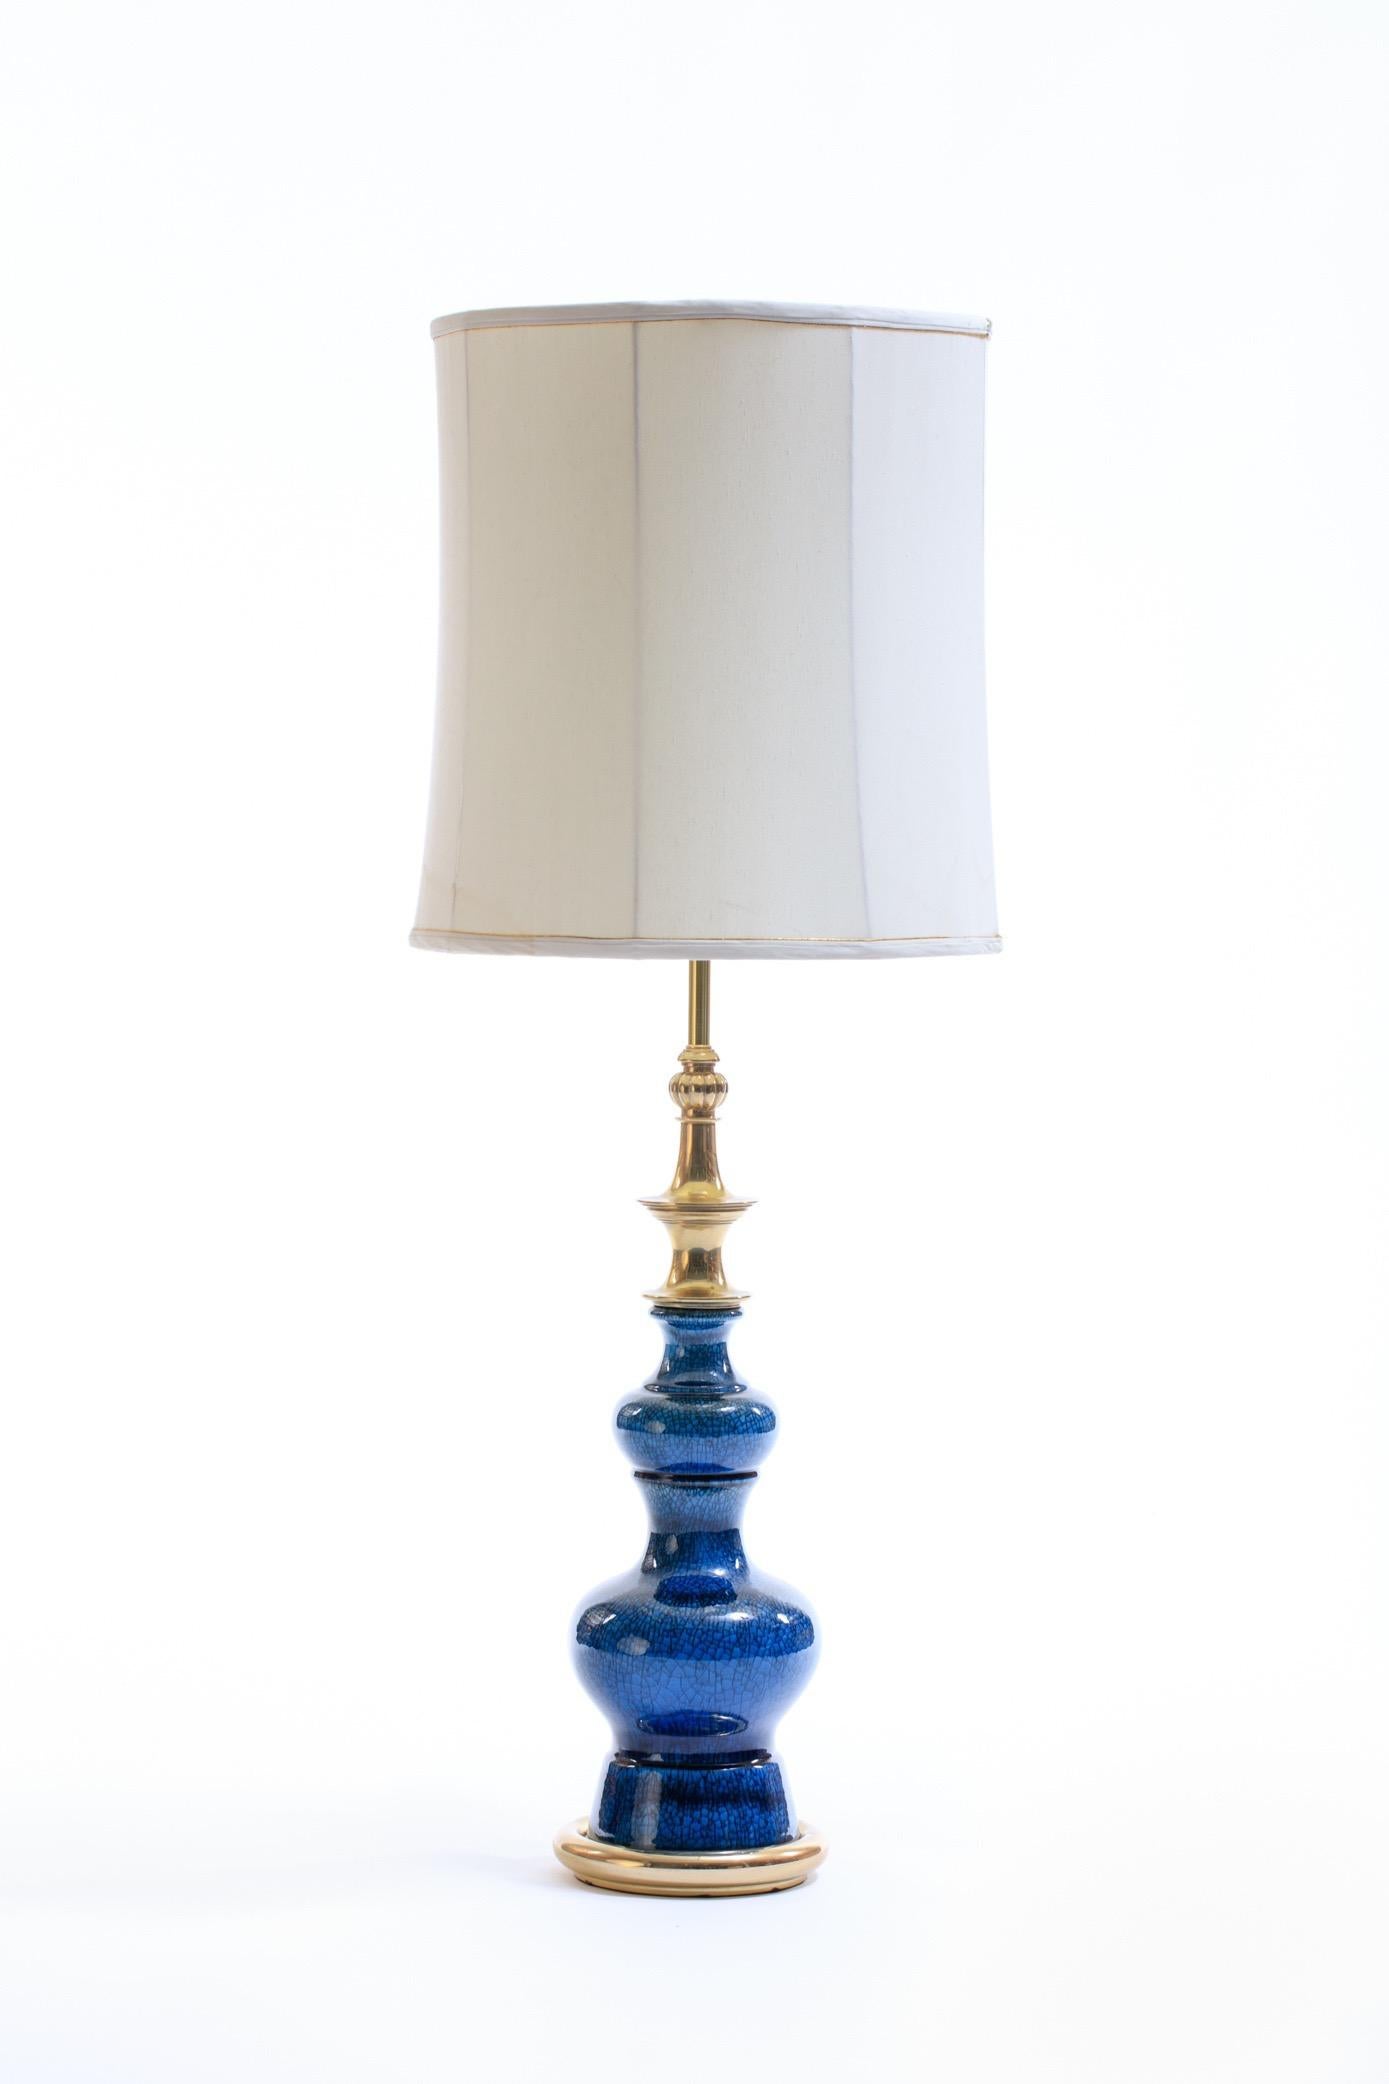 1960s lamp styles